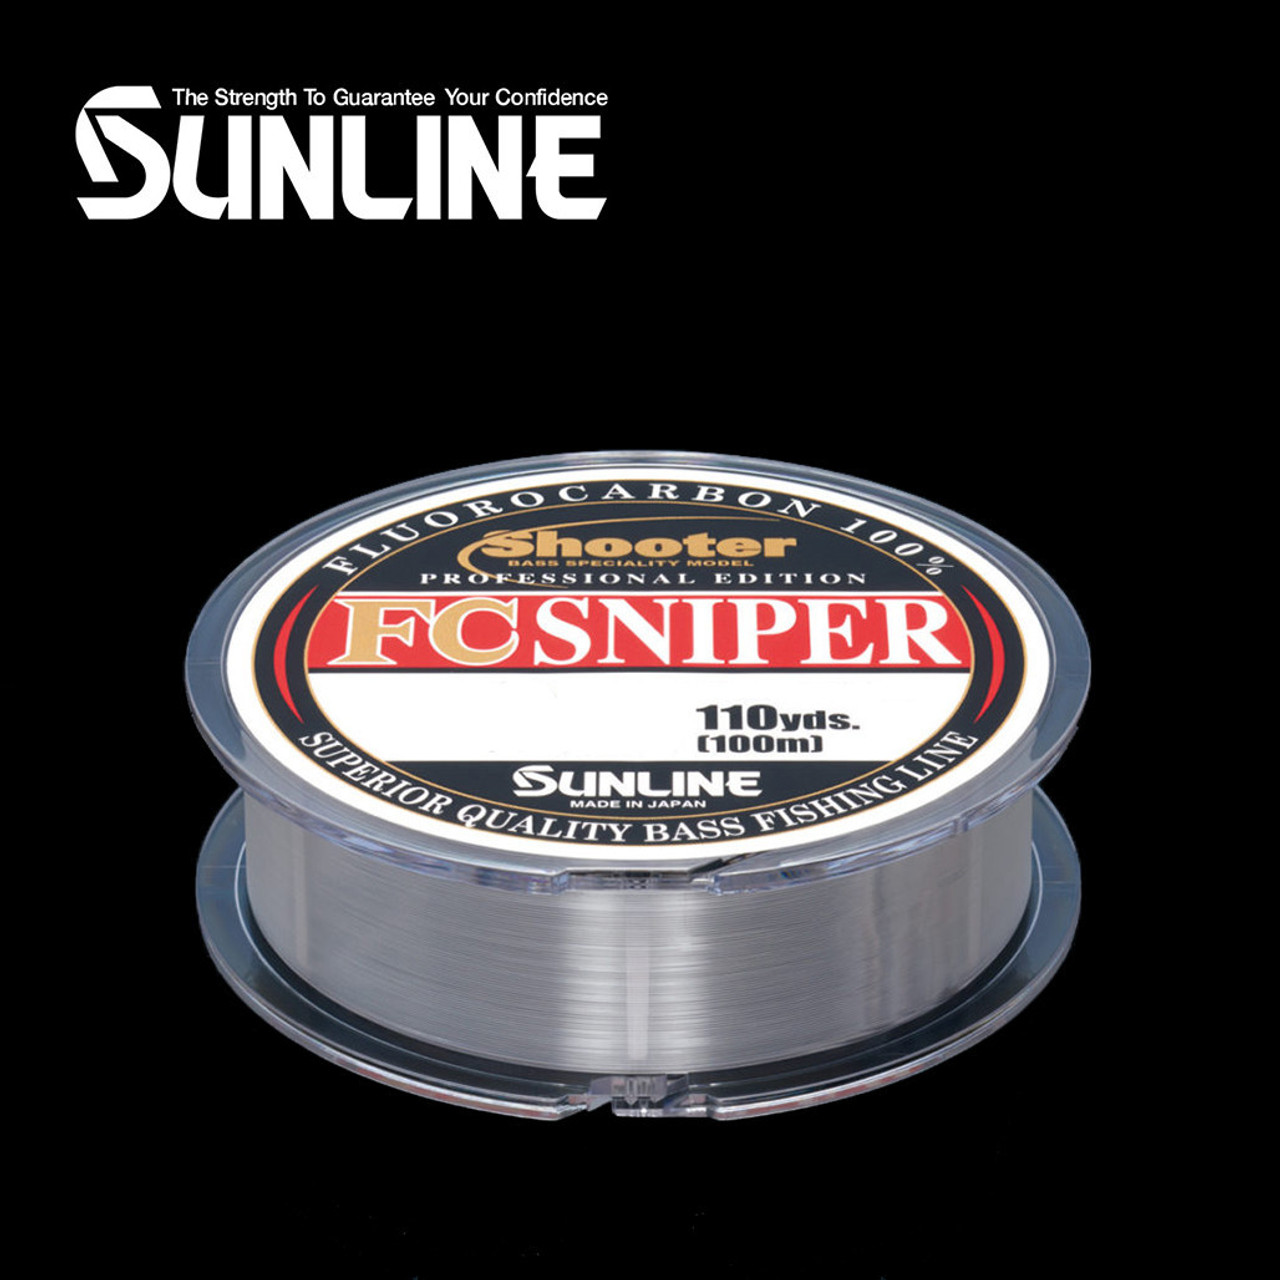 SUNLINE Shooter FC SNIPER Fluoro Carbon Line 8lbs. 110yds. NEW - KKJAPANLURE